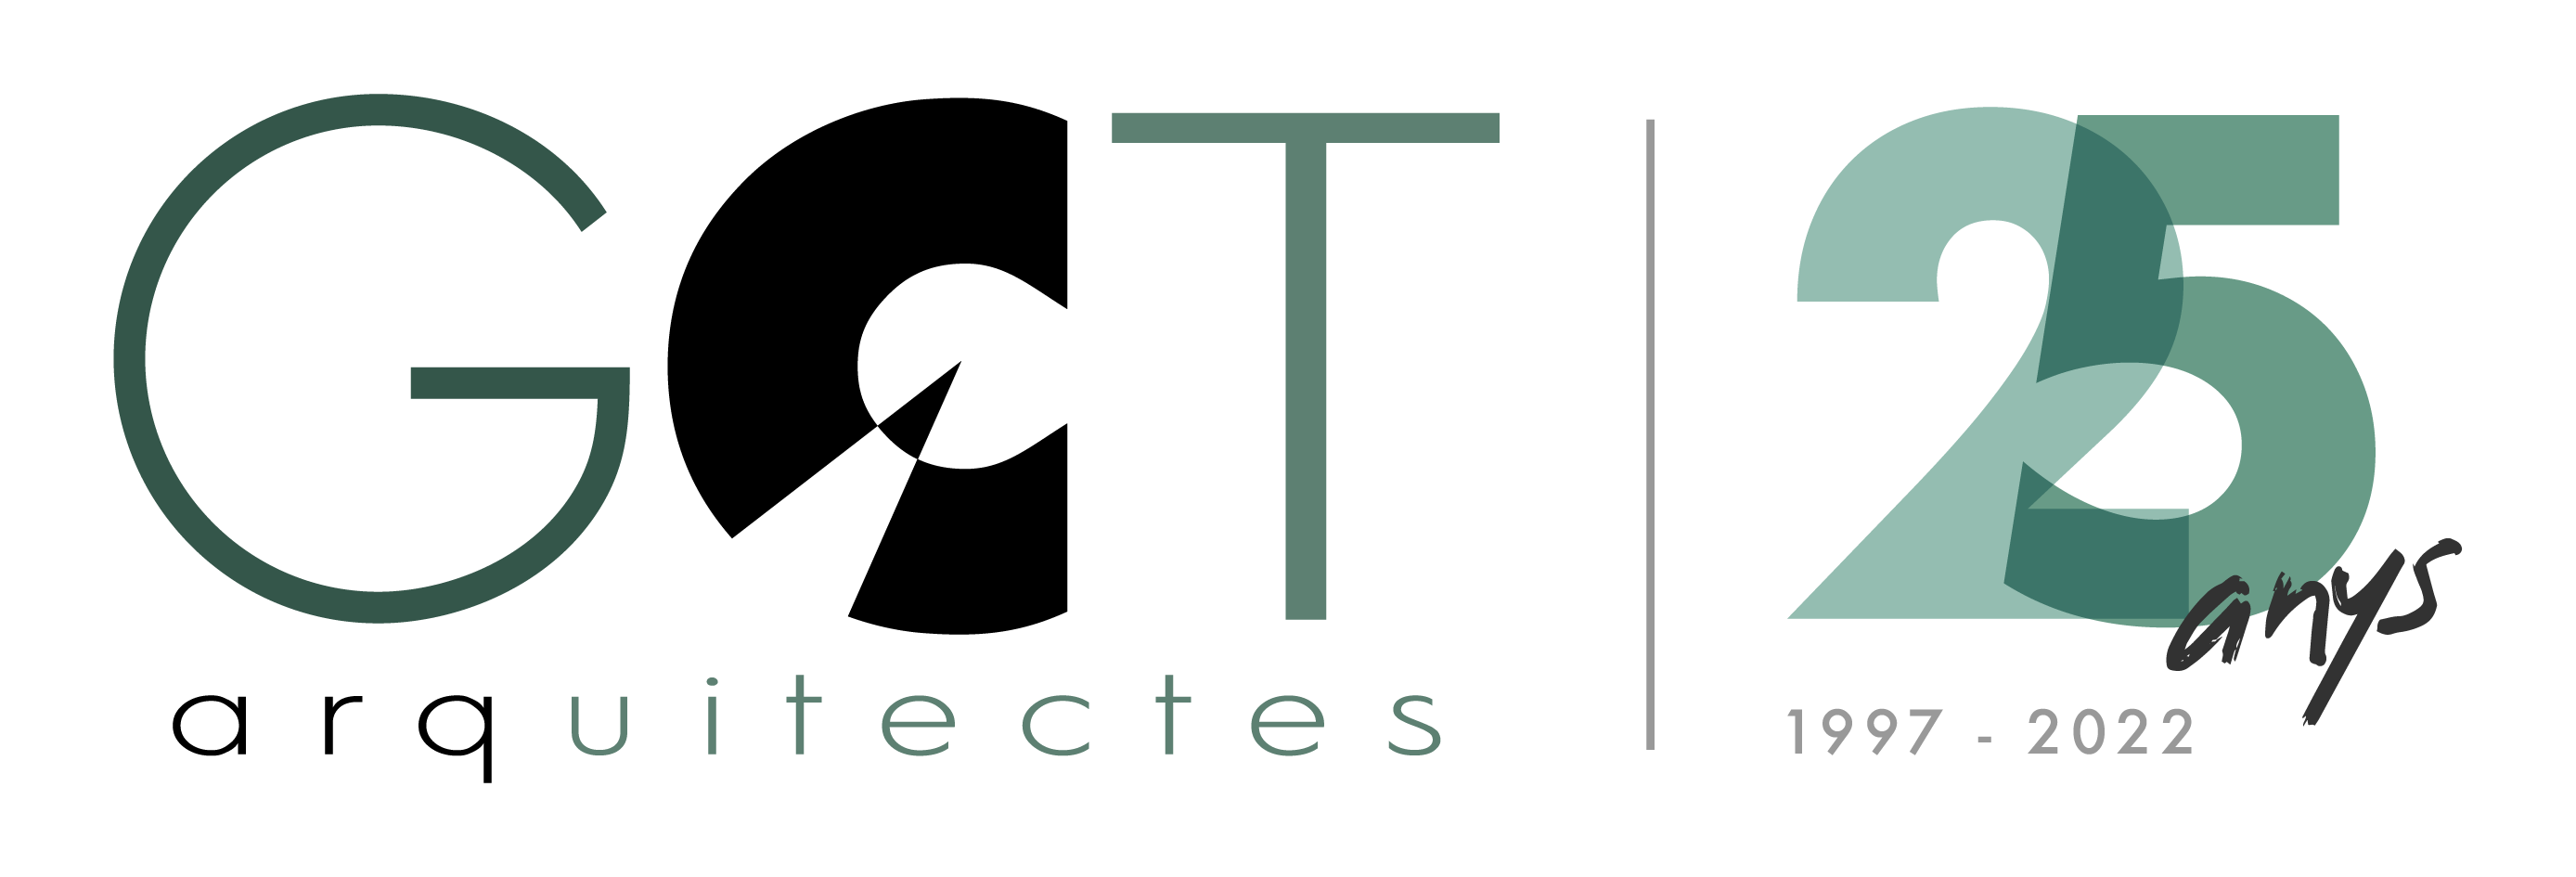 logo GCT arquitectes